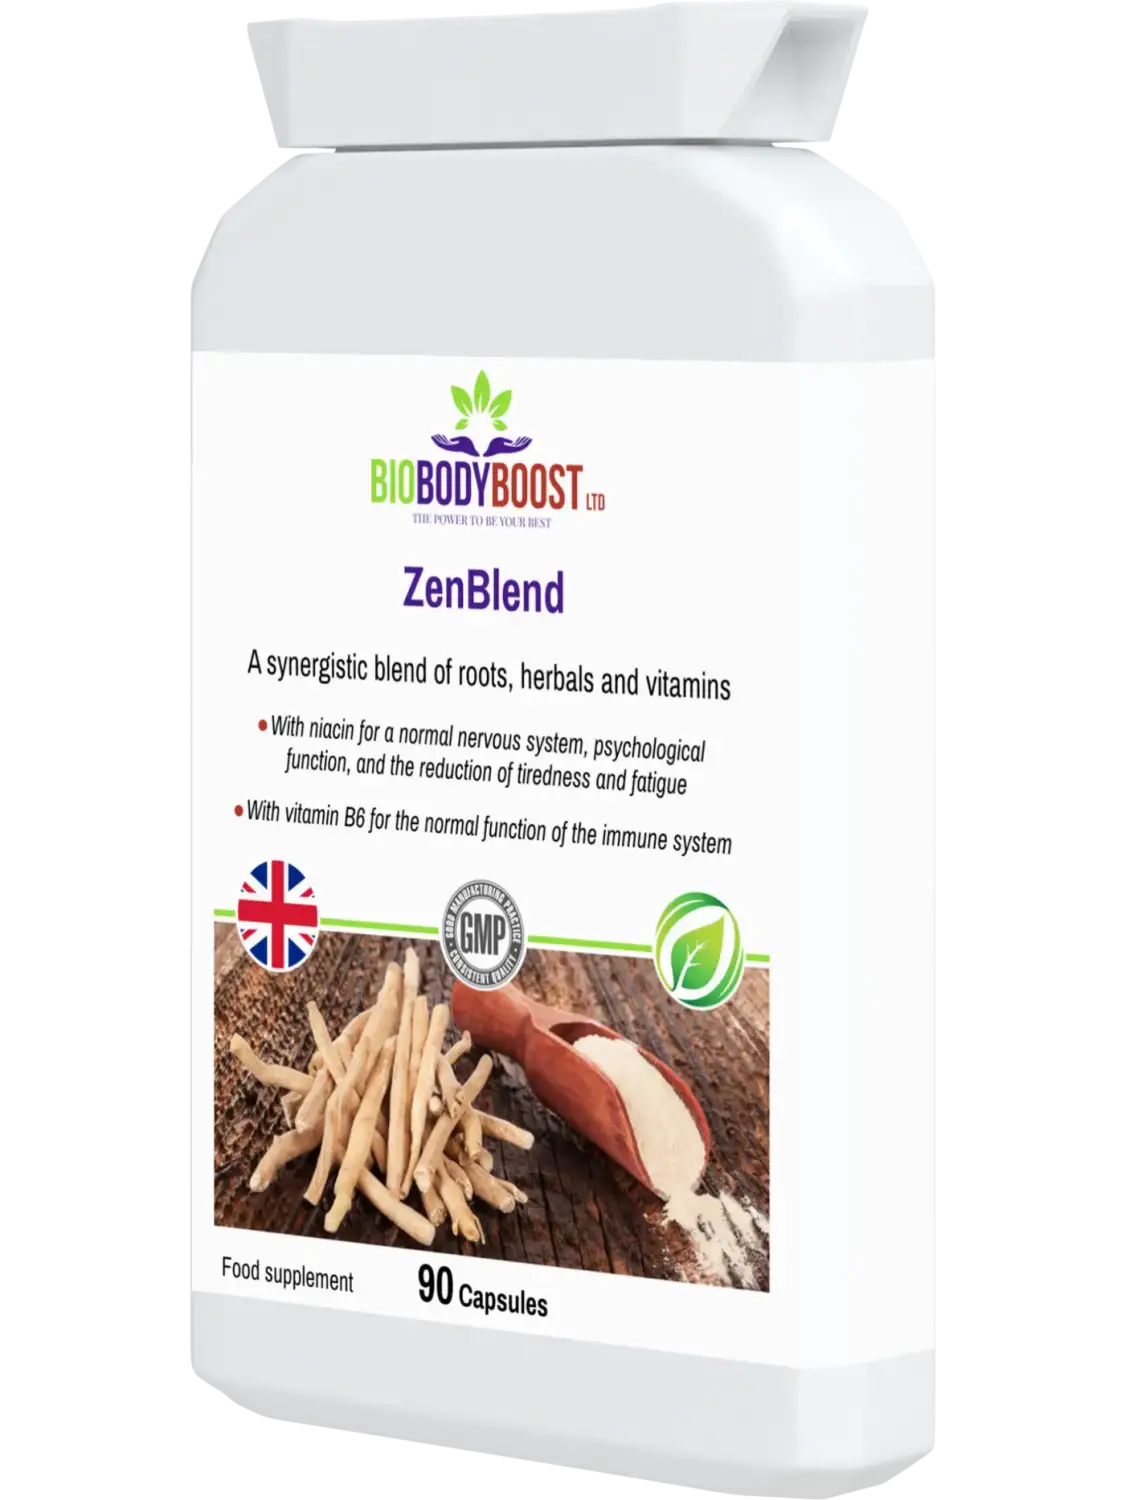 ZenBlend Ashwagandha Complex - Vitamins & Supplements normal energy - yielding metabolism